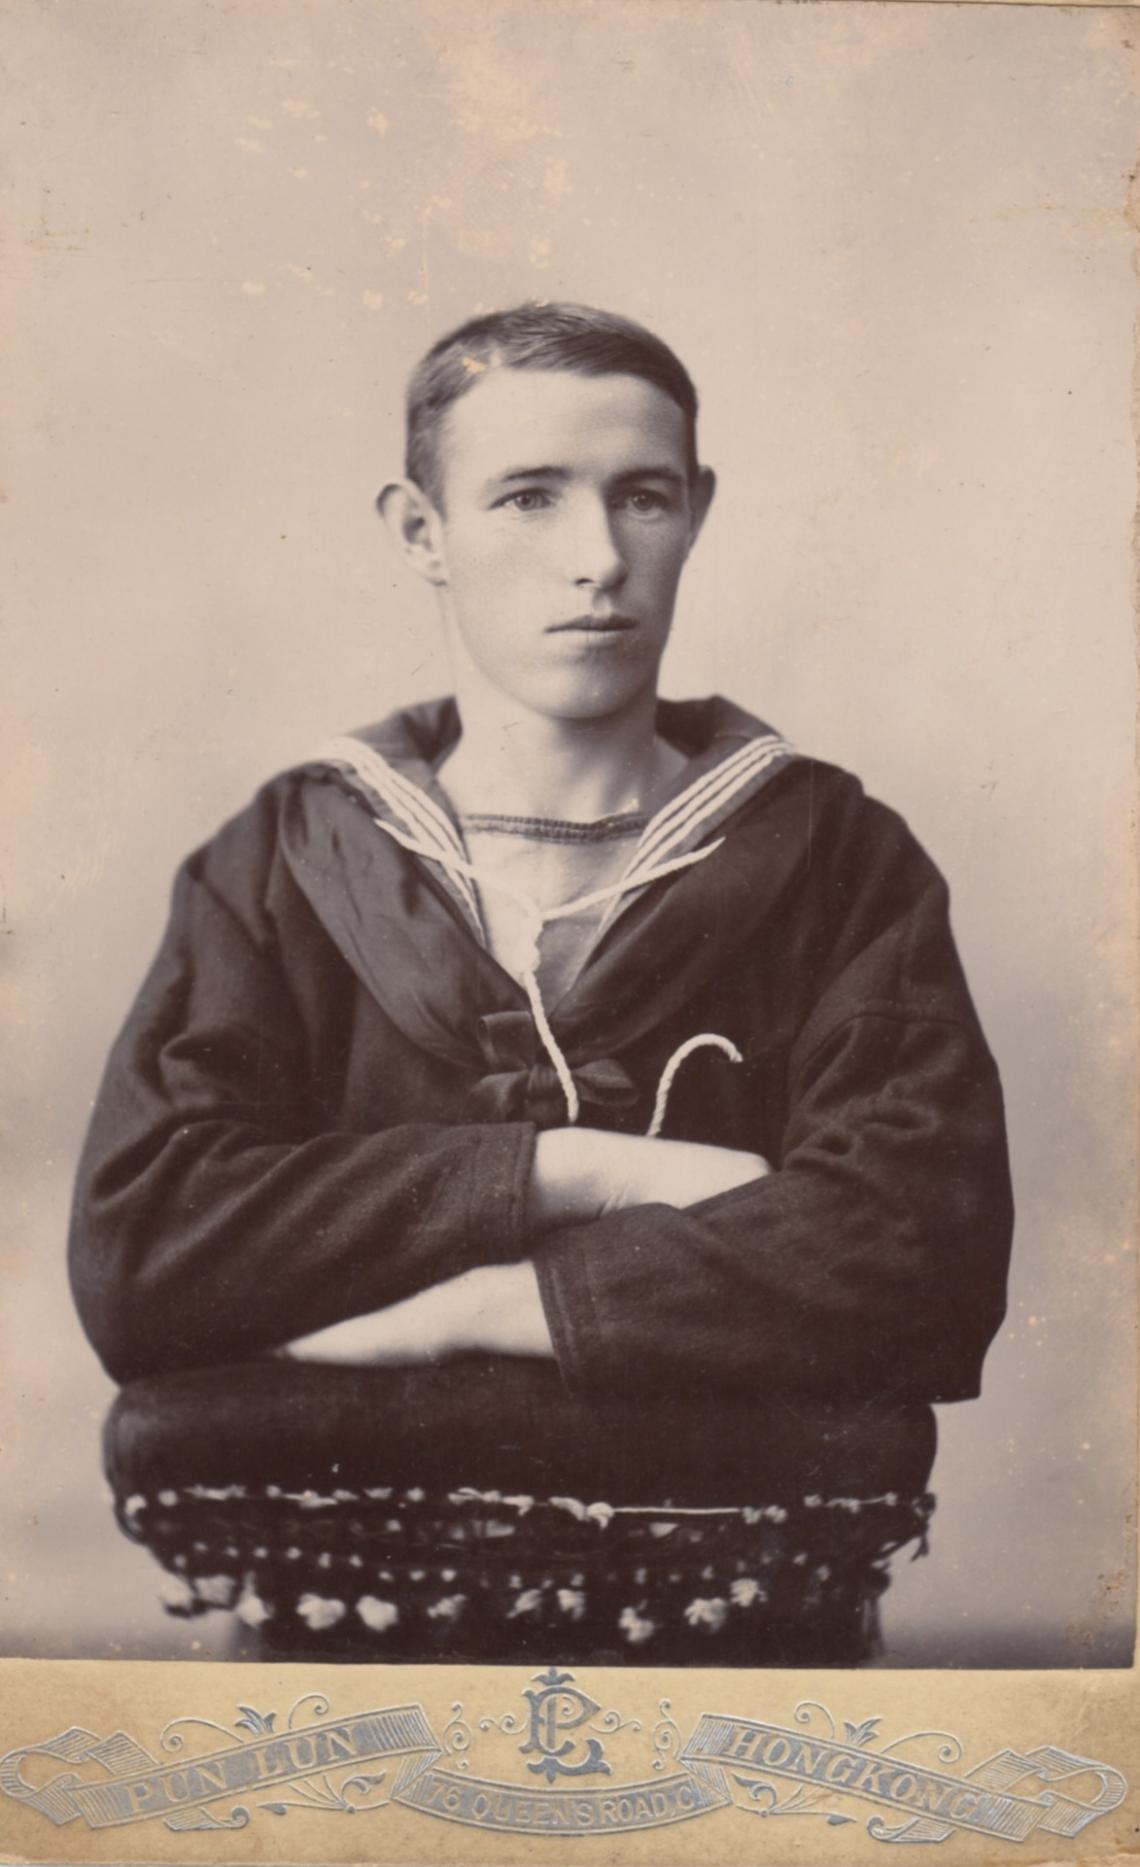 Photograph of young Cornish sailor, taken around 1900